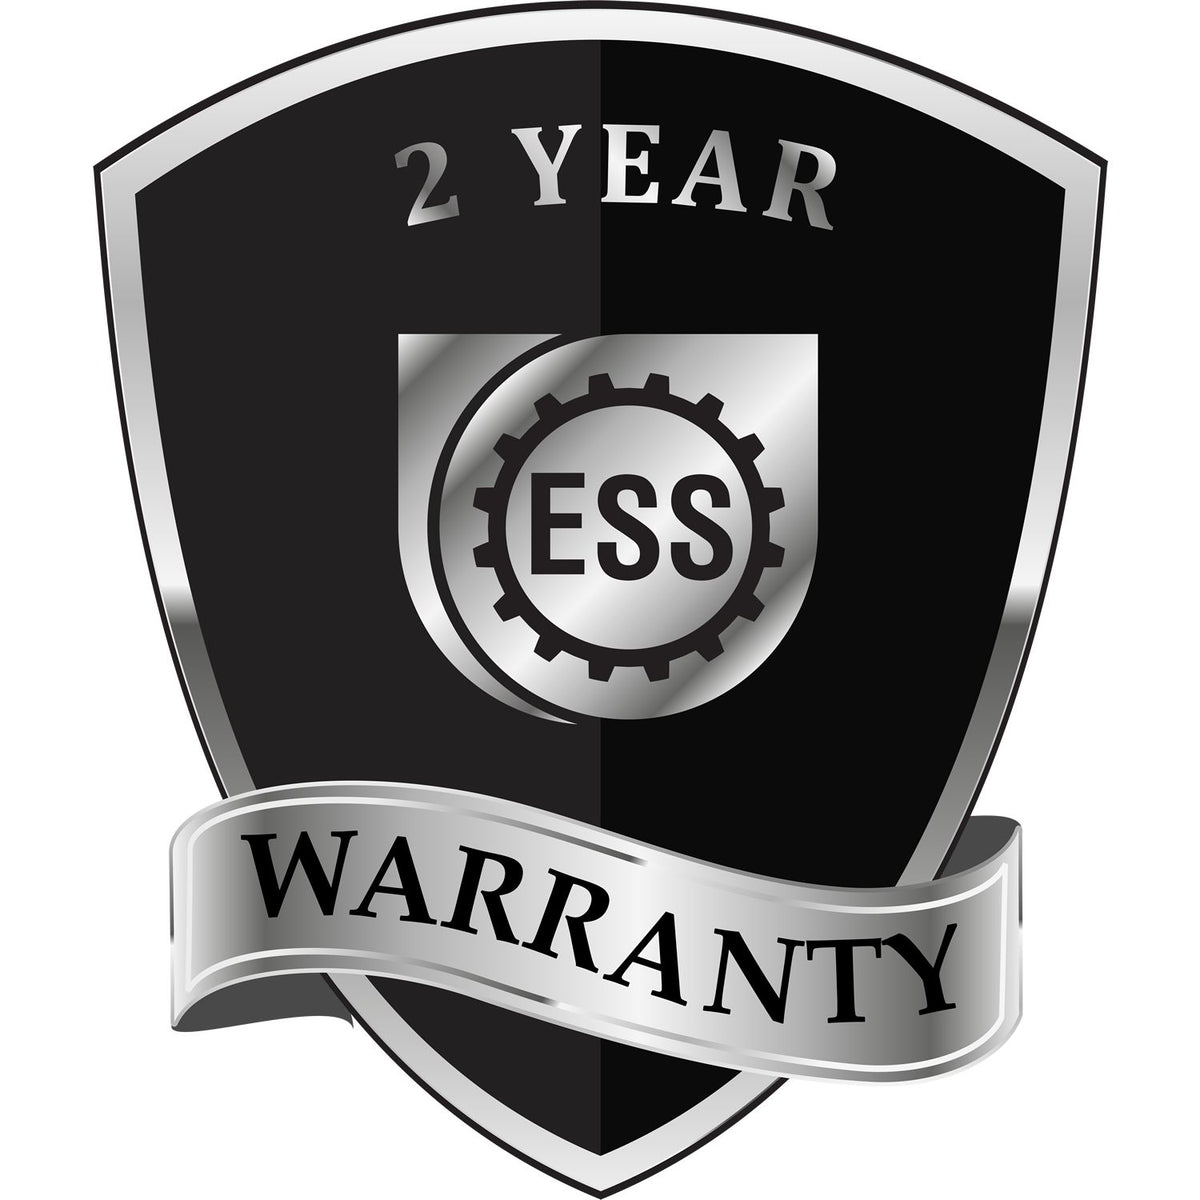 A black and silver badge or emblem showing warranty information for the Gift North Carolina Land Surveyor Seal